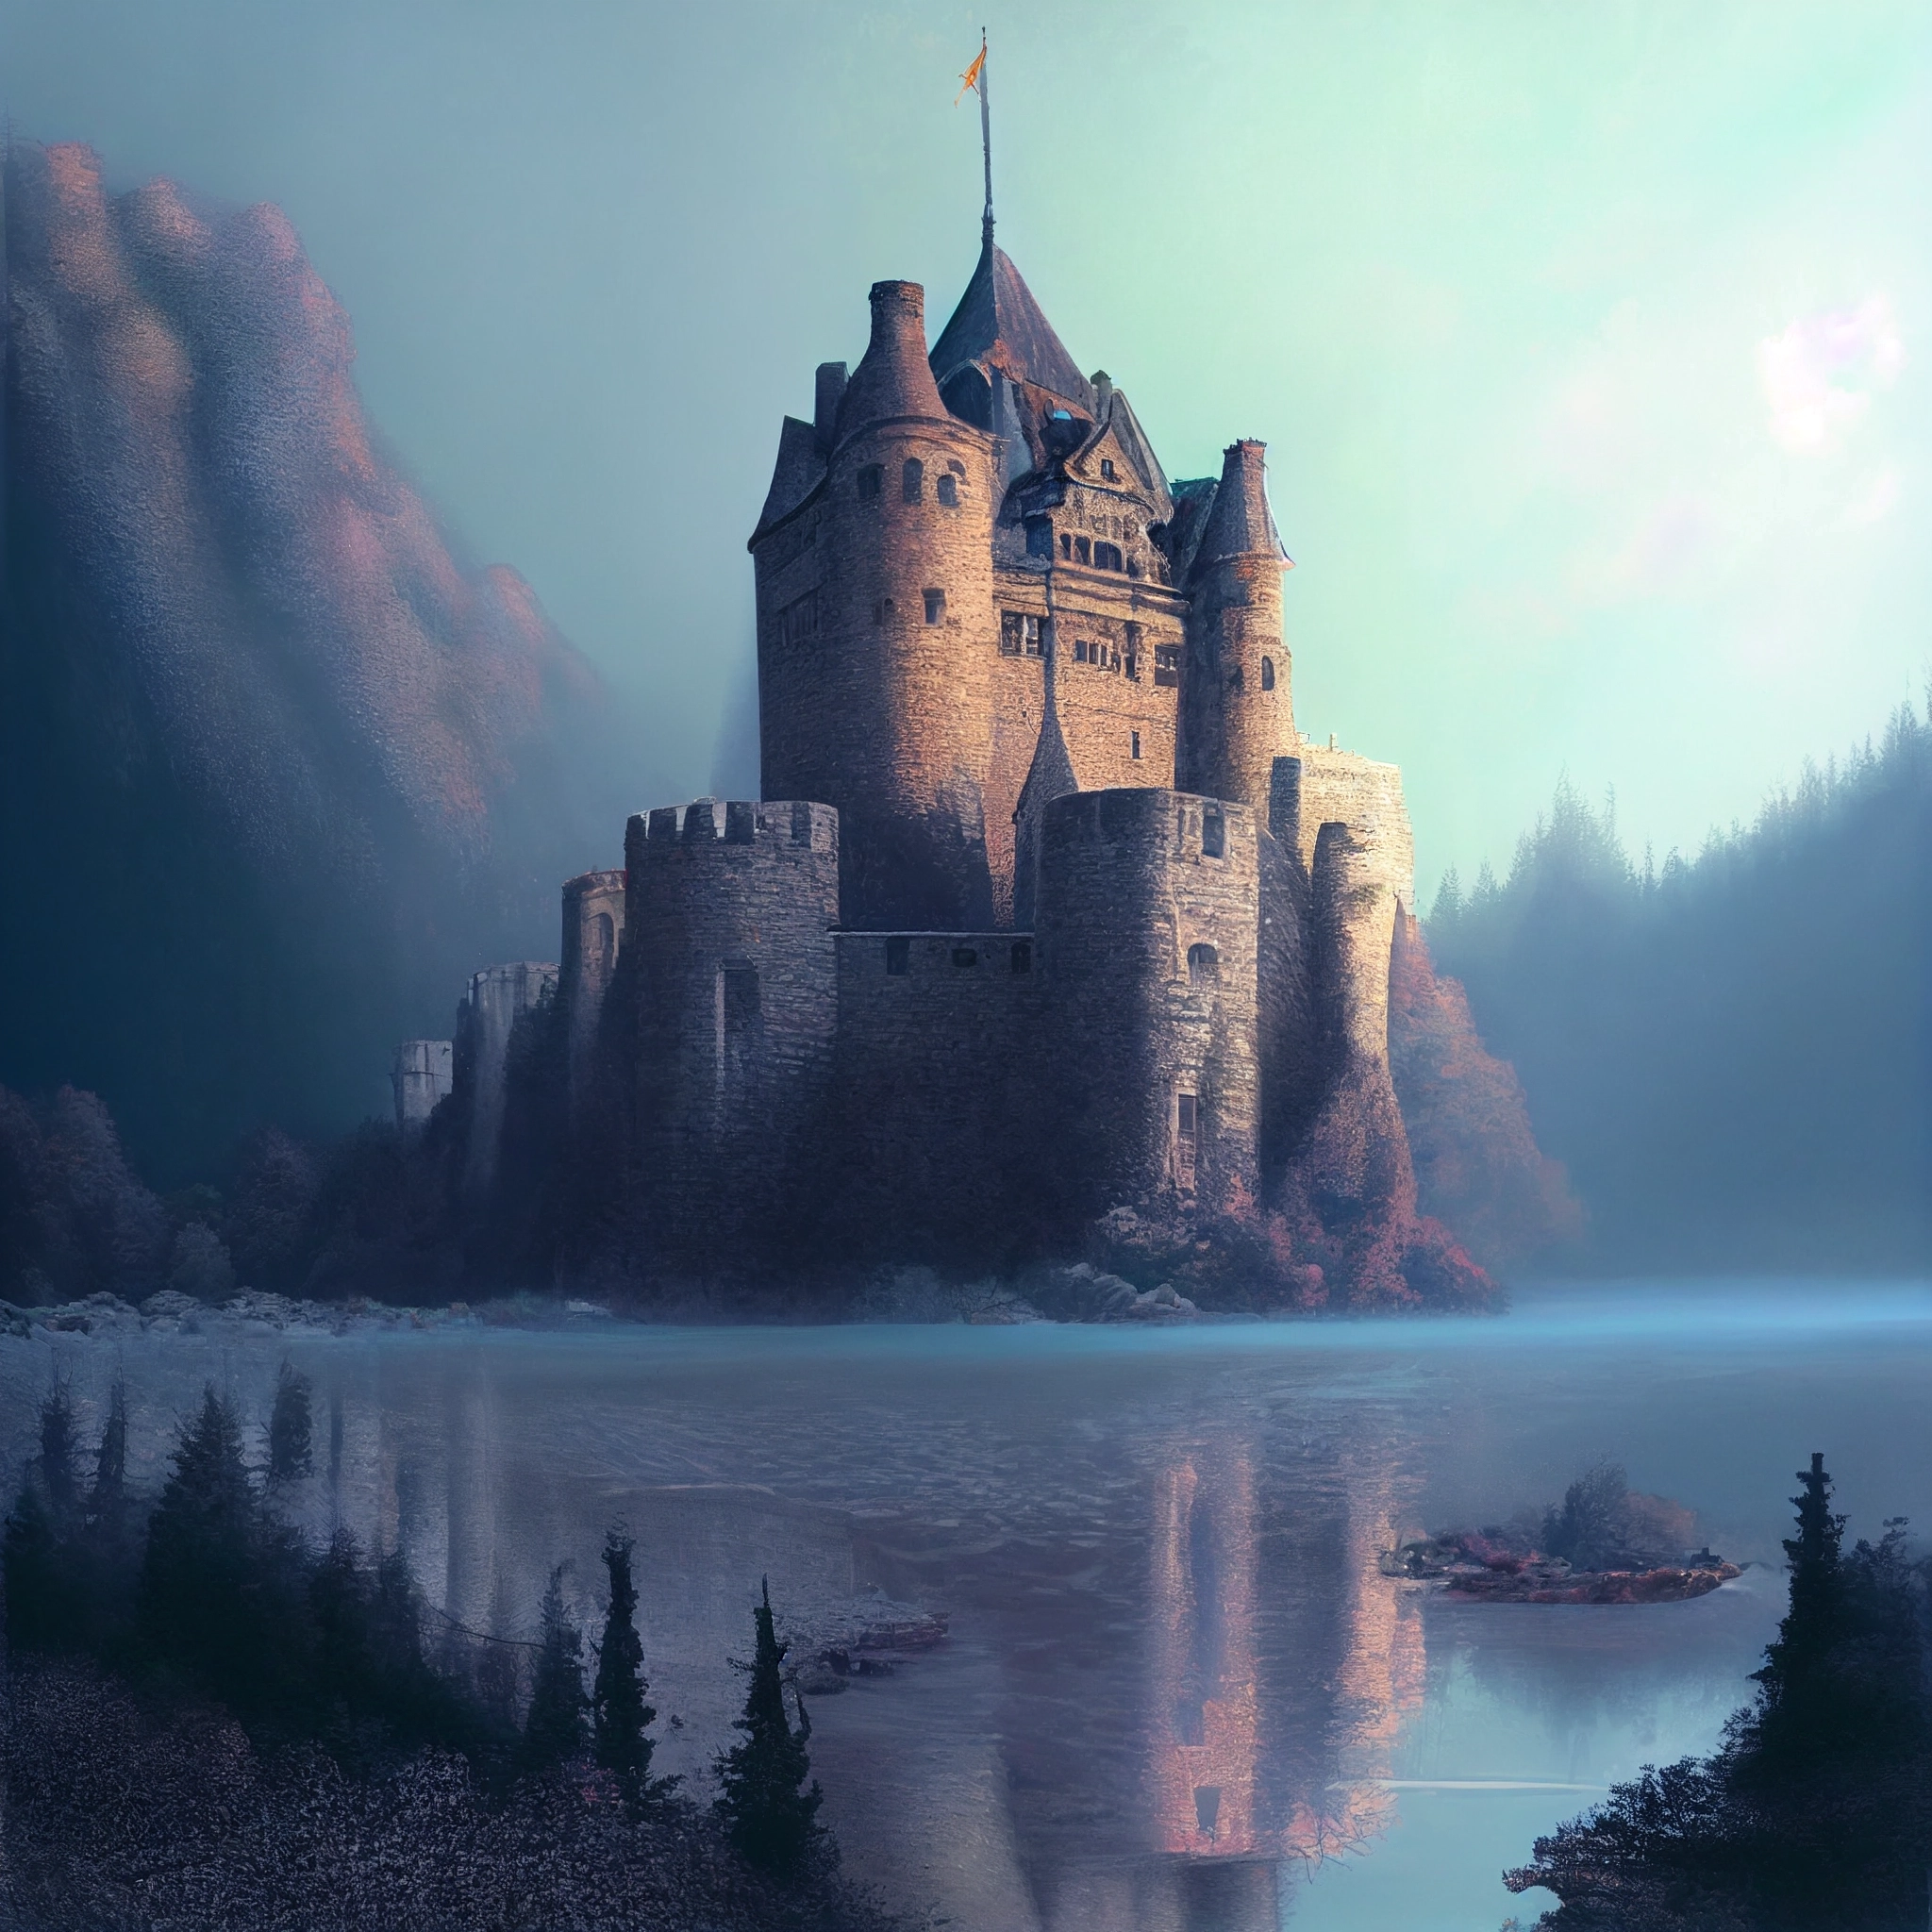 A dark castle